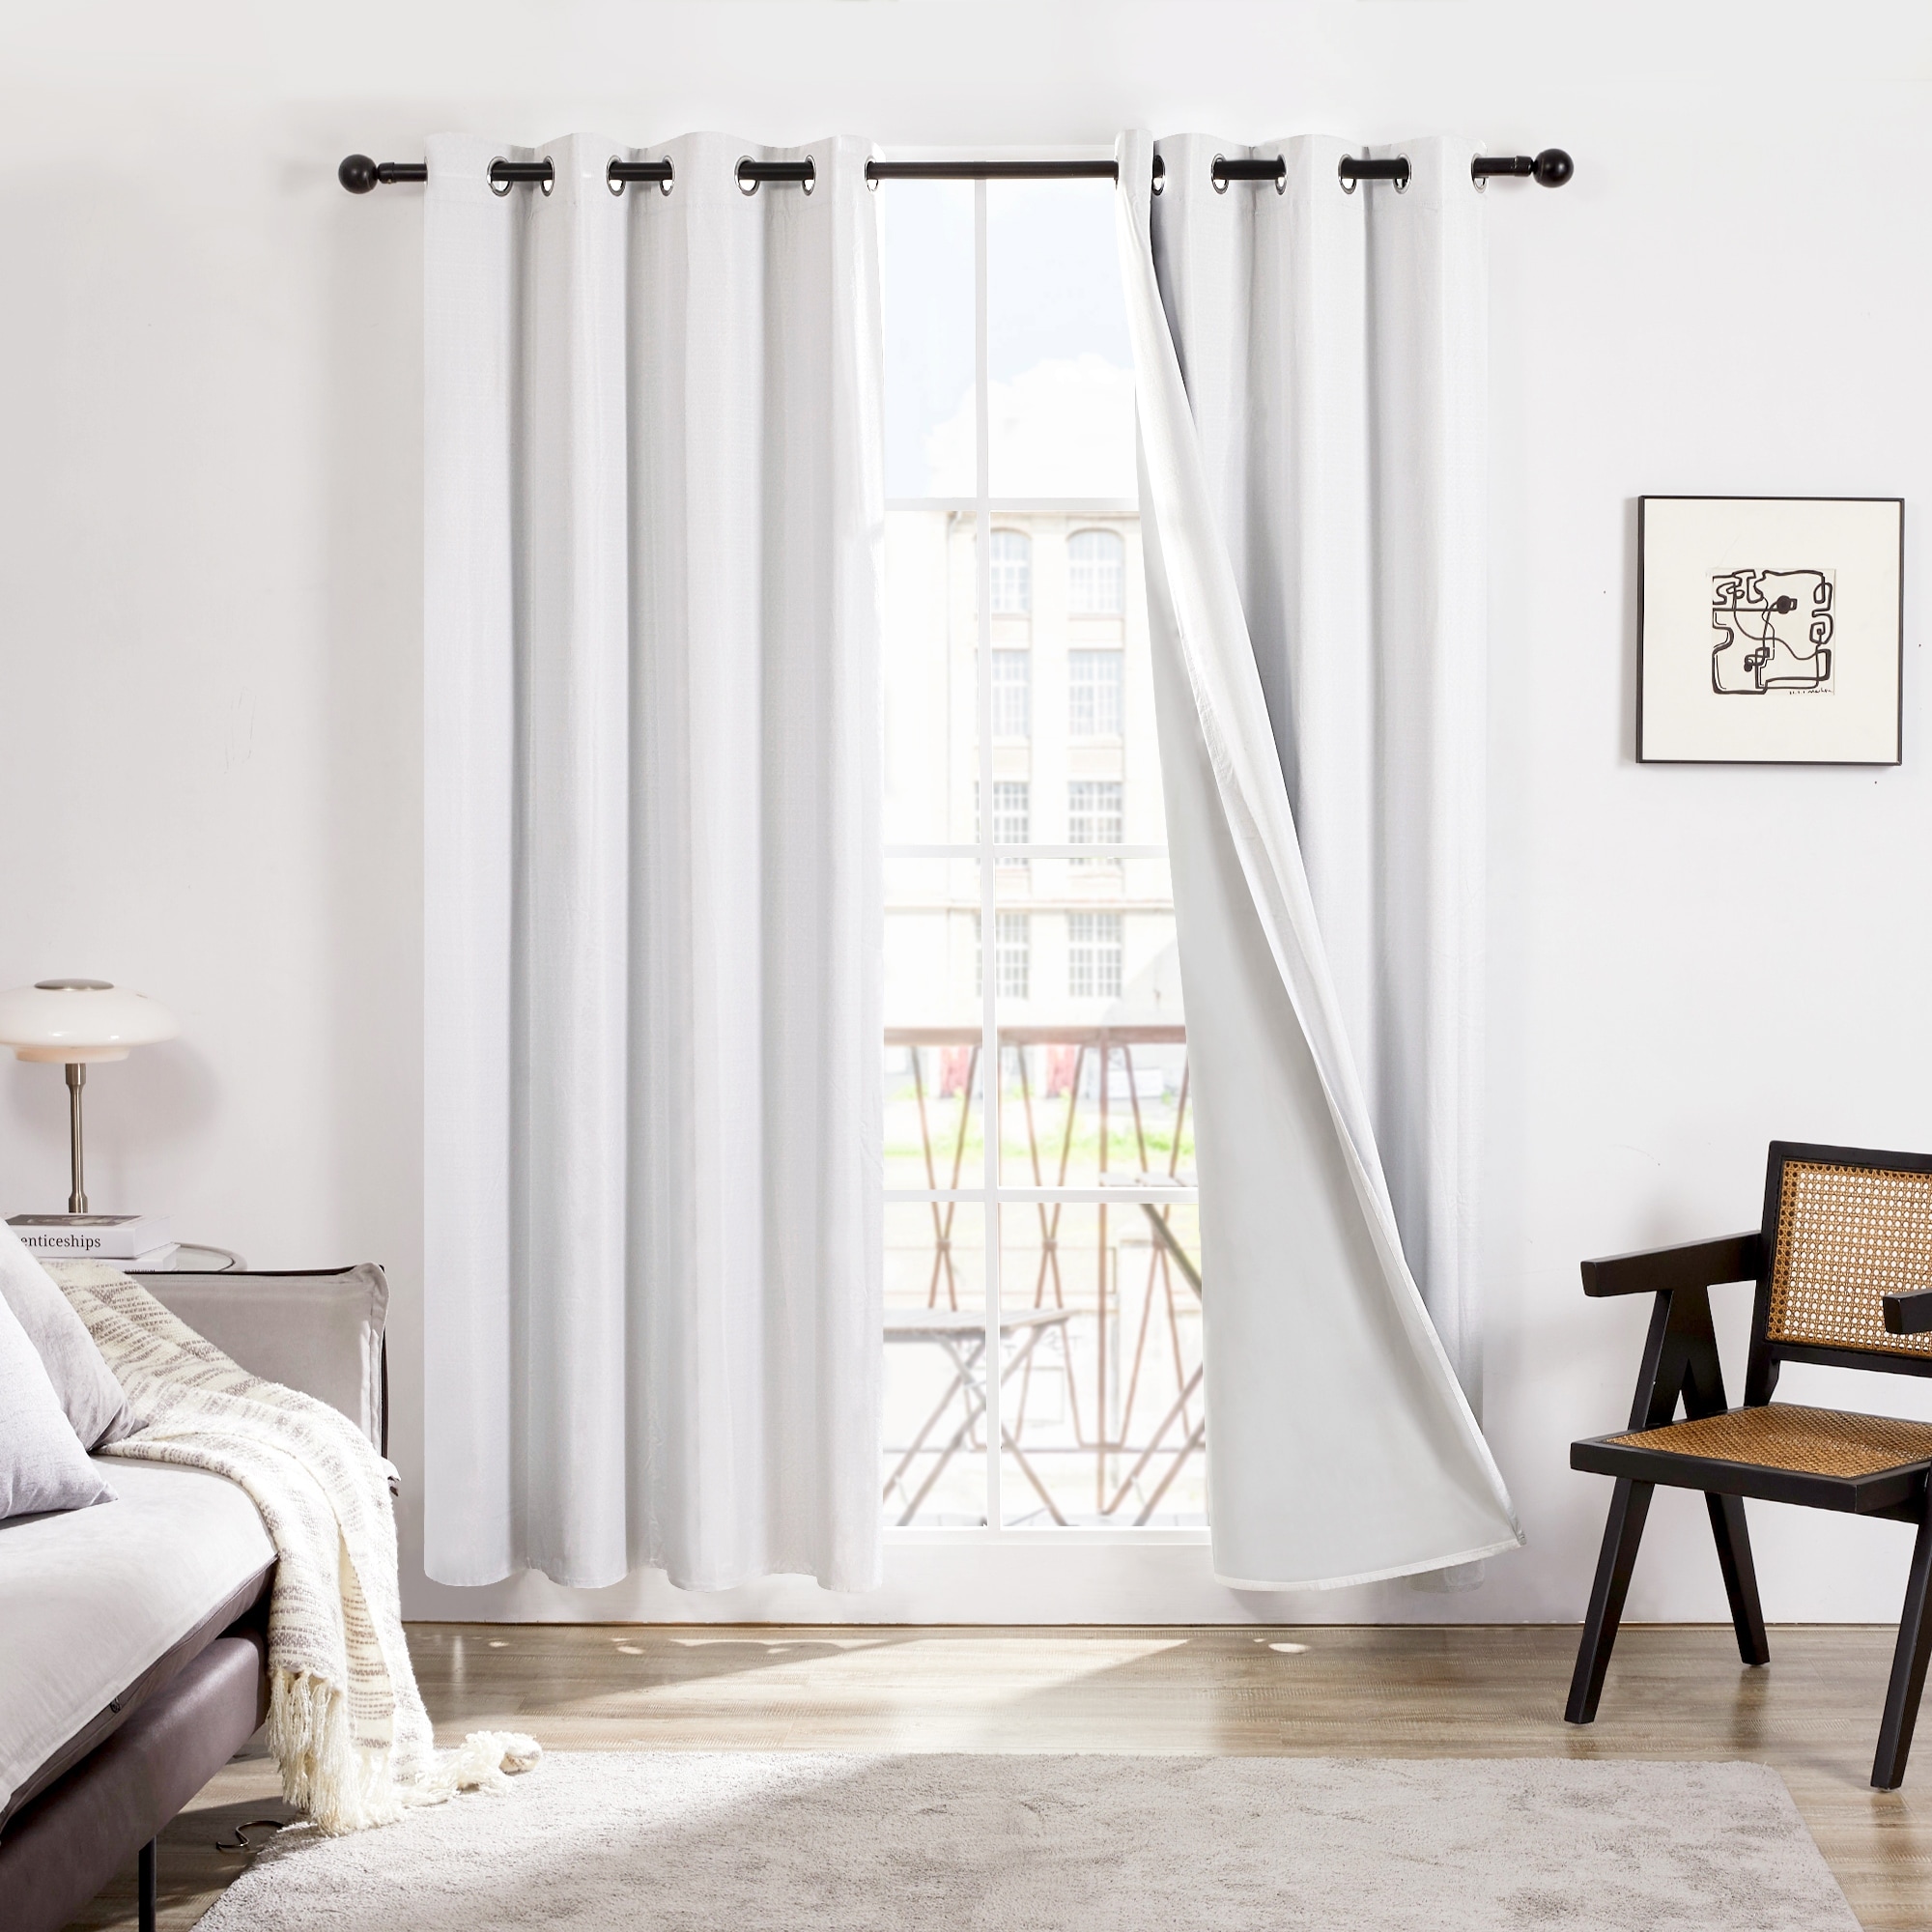 28 Curtains ideas in 2023  curtains, chanel decor, shower curtain